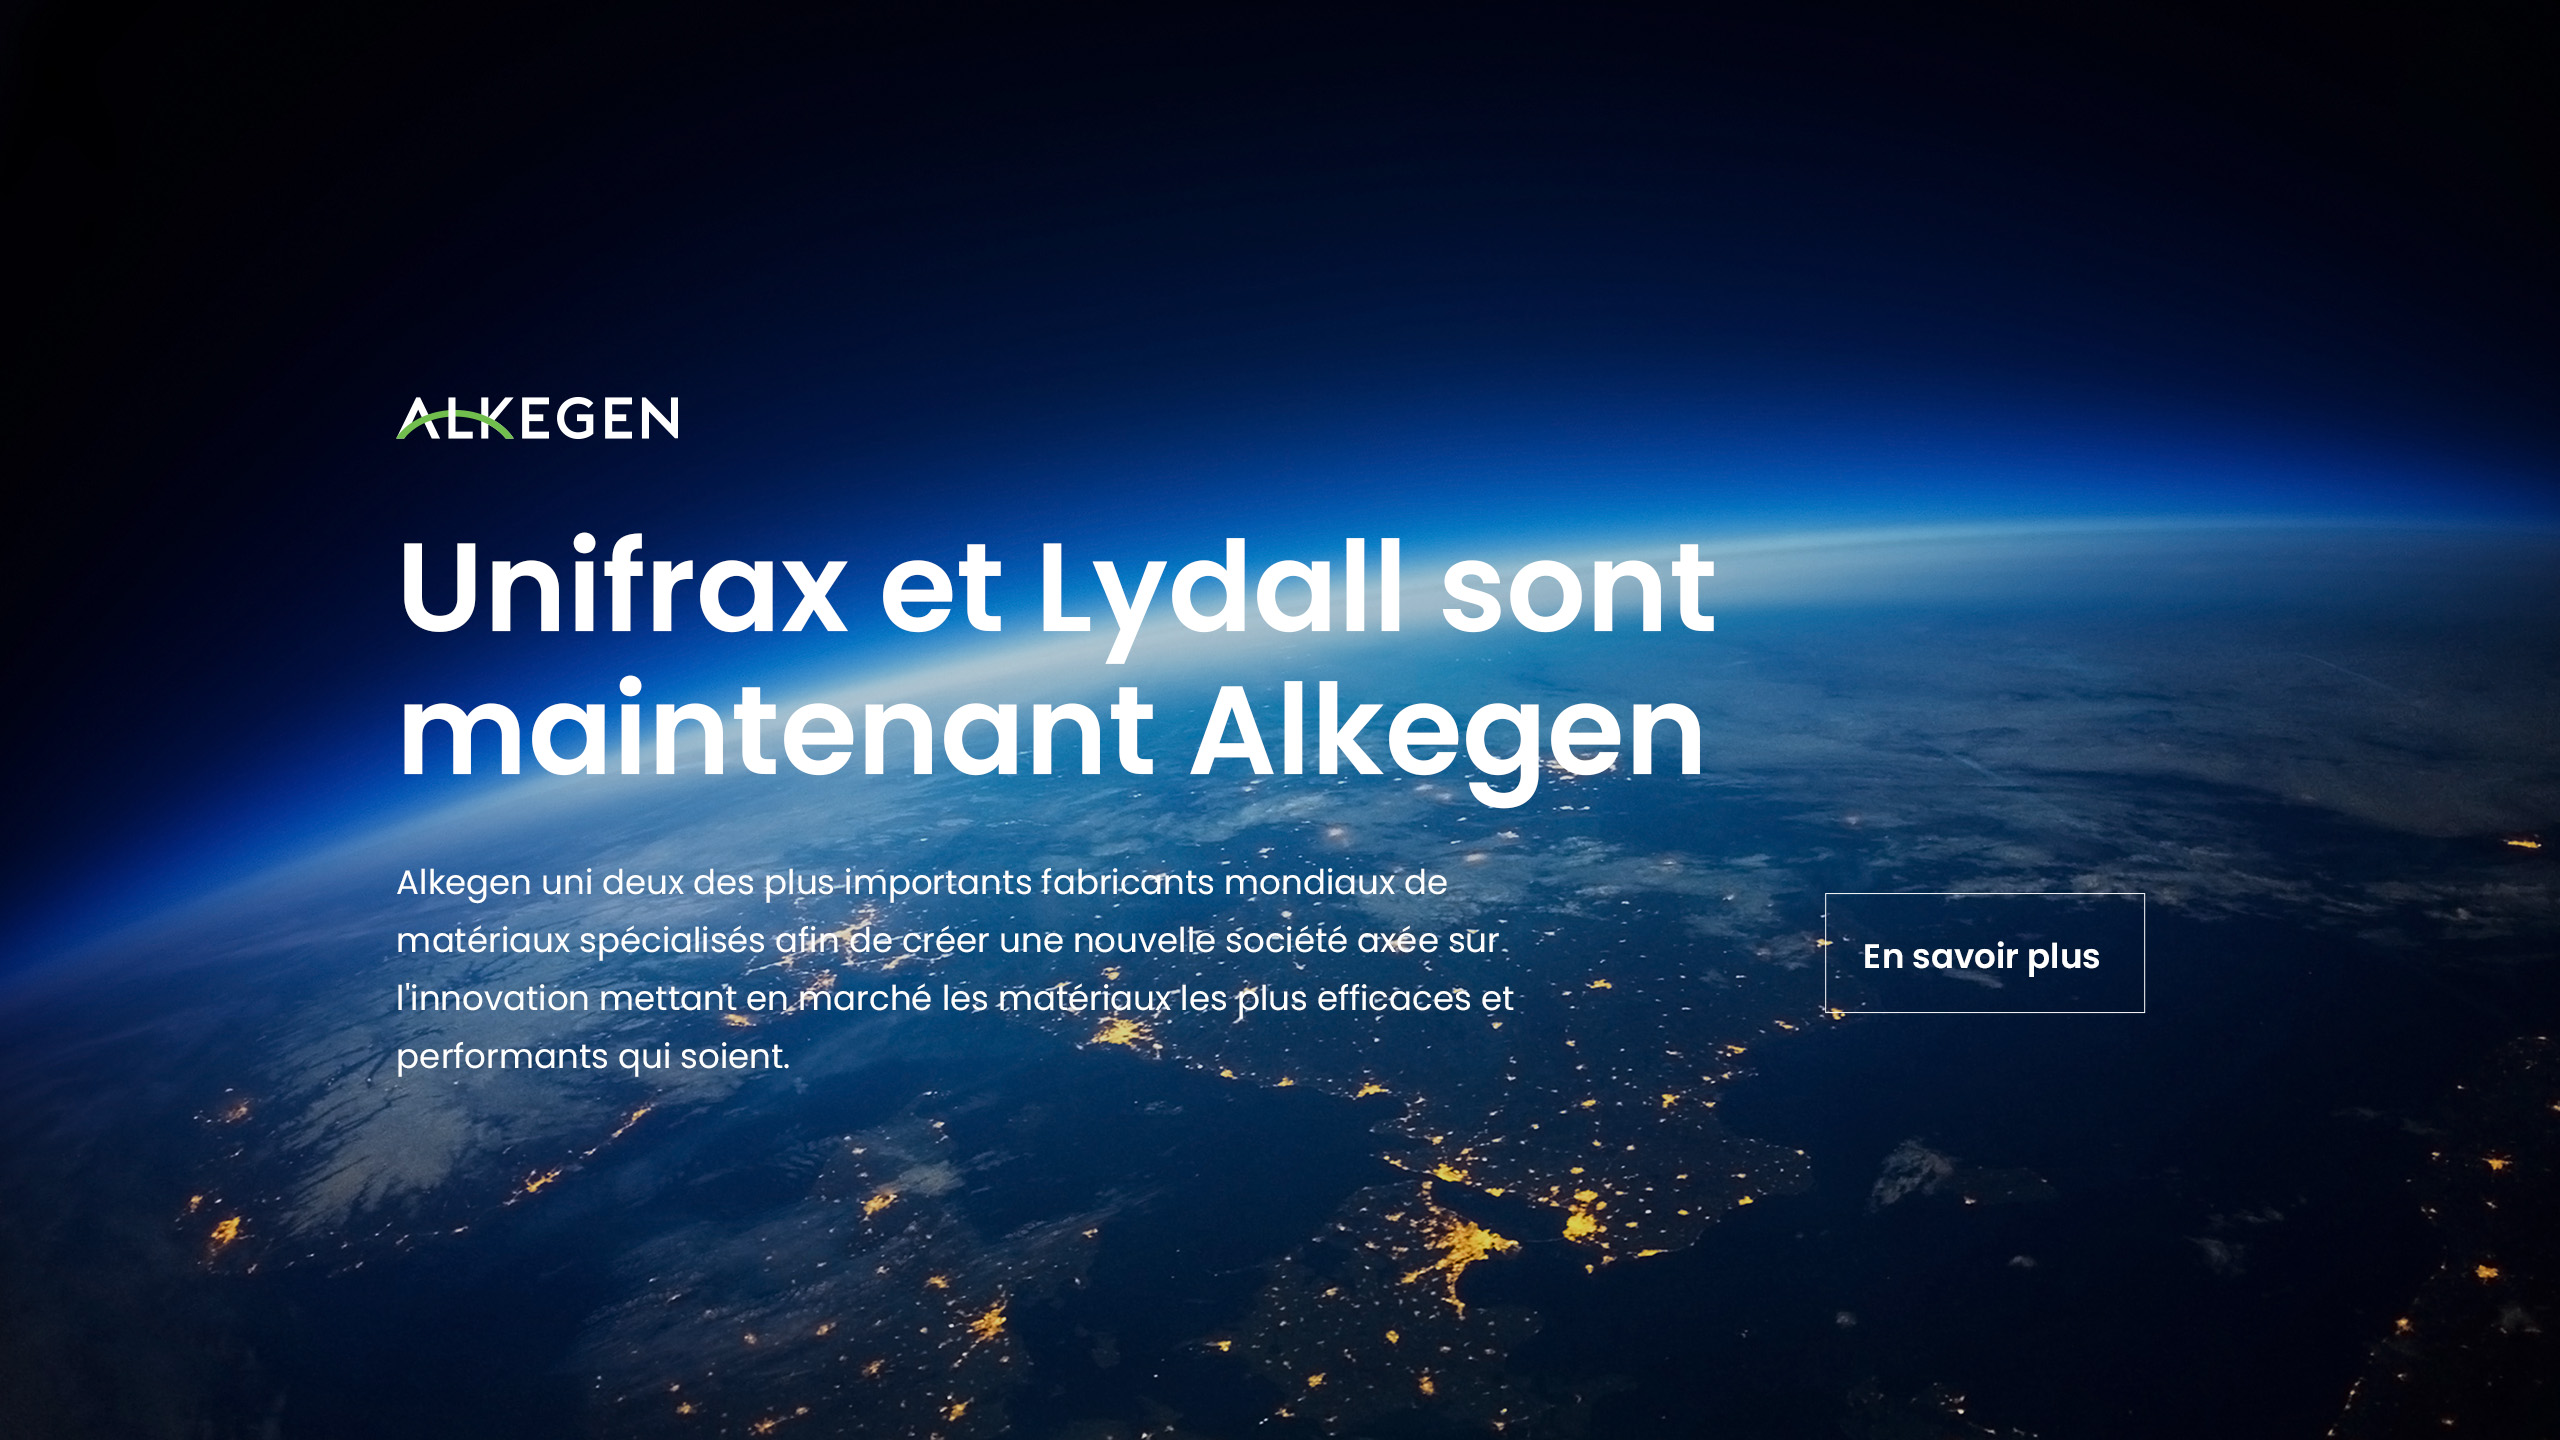 Unifrax et Lydall sont maintenant Alkegen